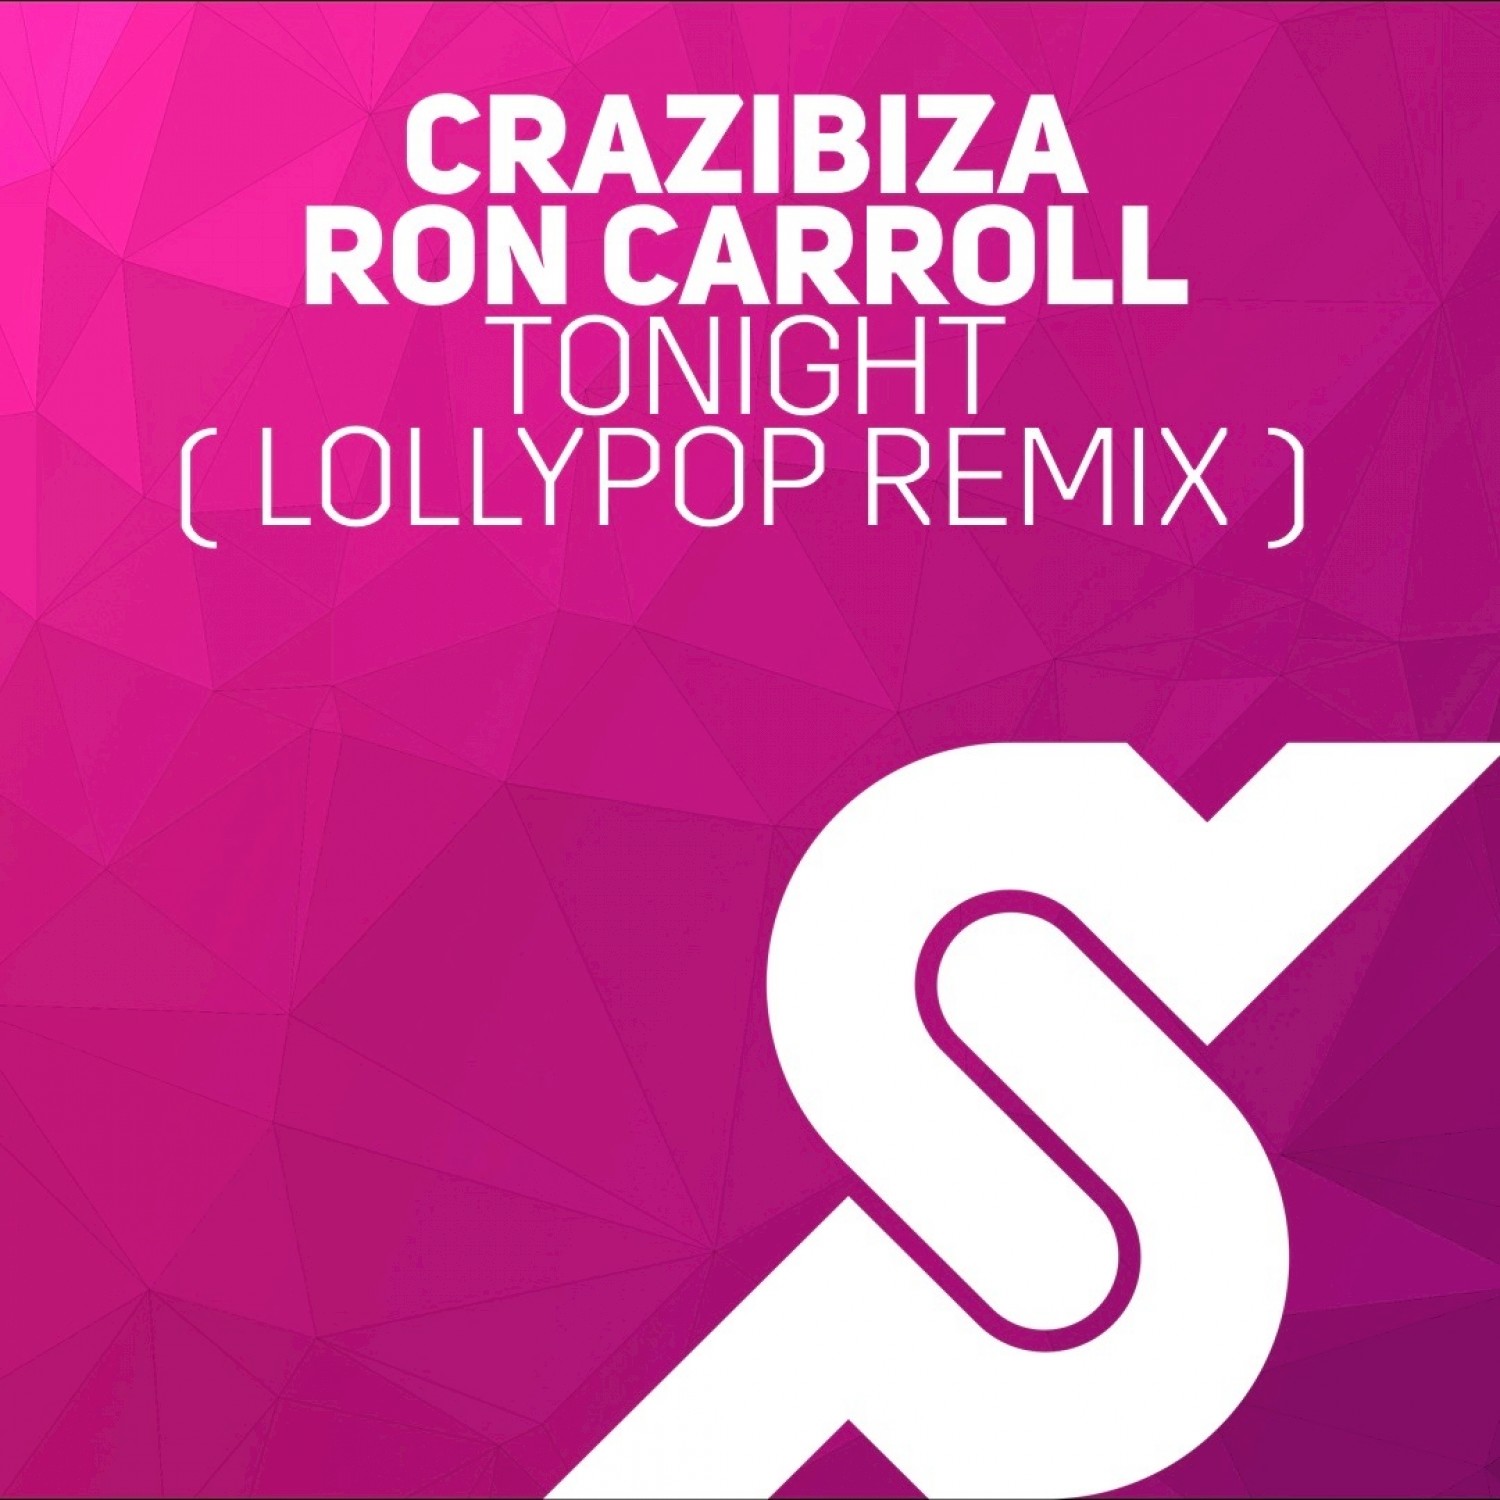 Tonight (Lollypop Remix )